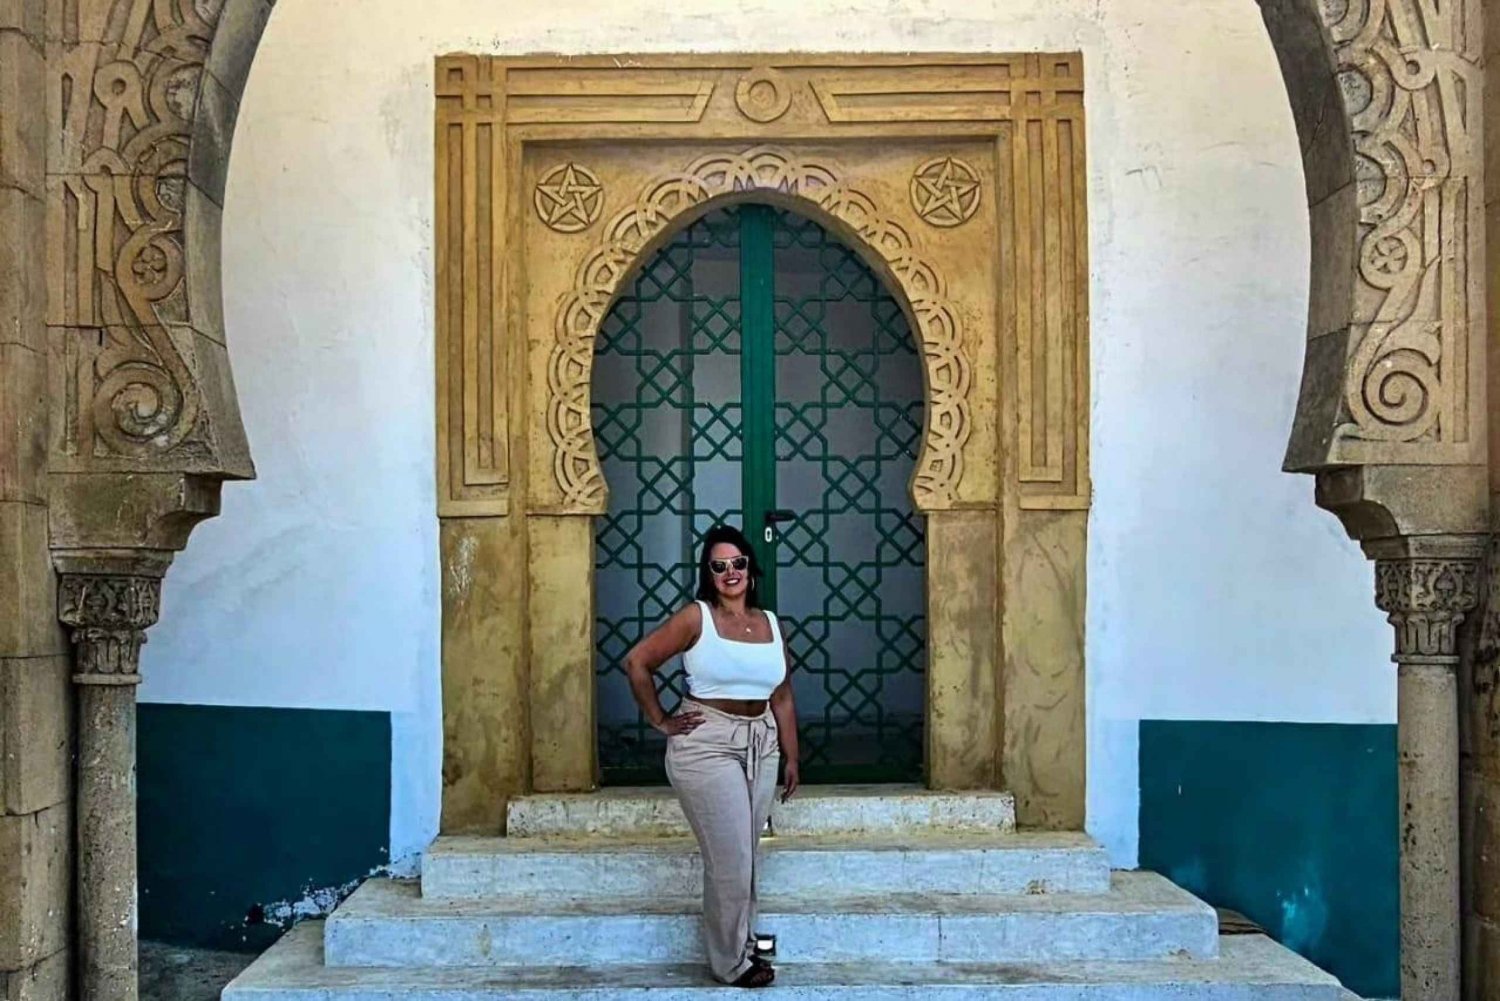 Malaga: Tetouan, UNESCO-sted og Ceuta - privat tur til Marokko